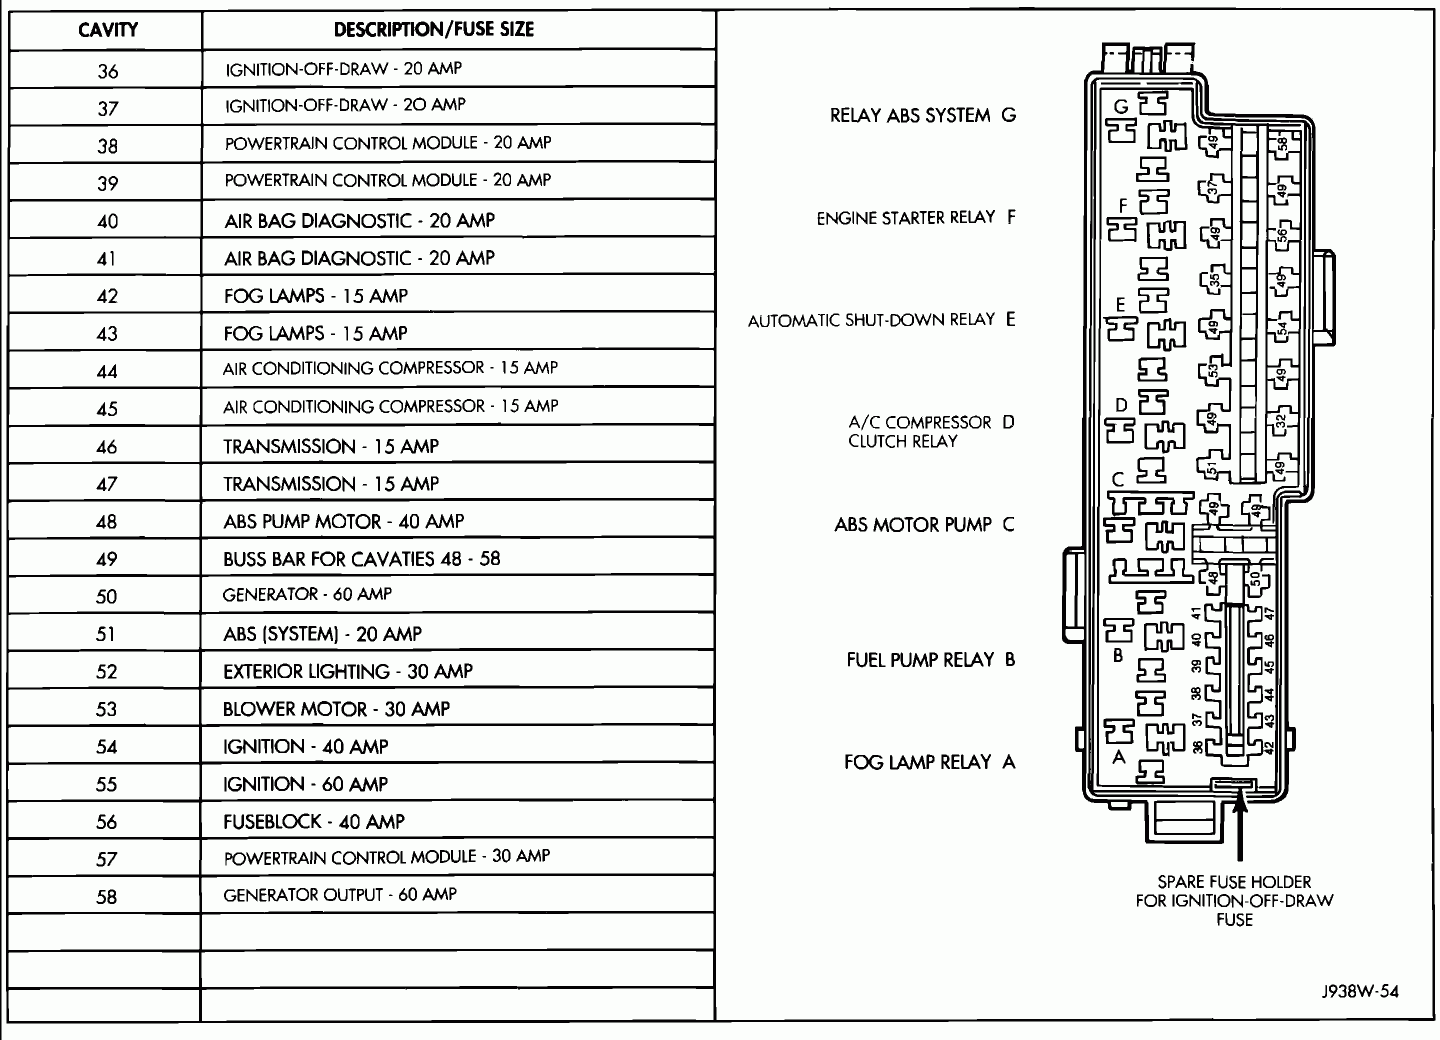 93 Grand Cherokee Fuse Box Diagram